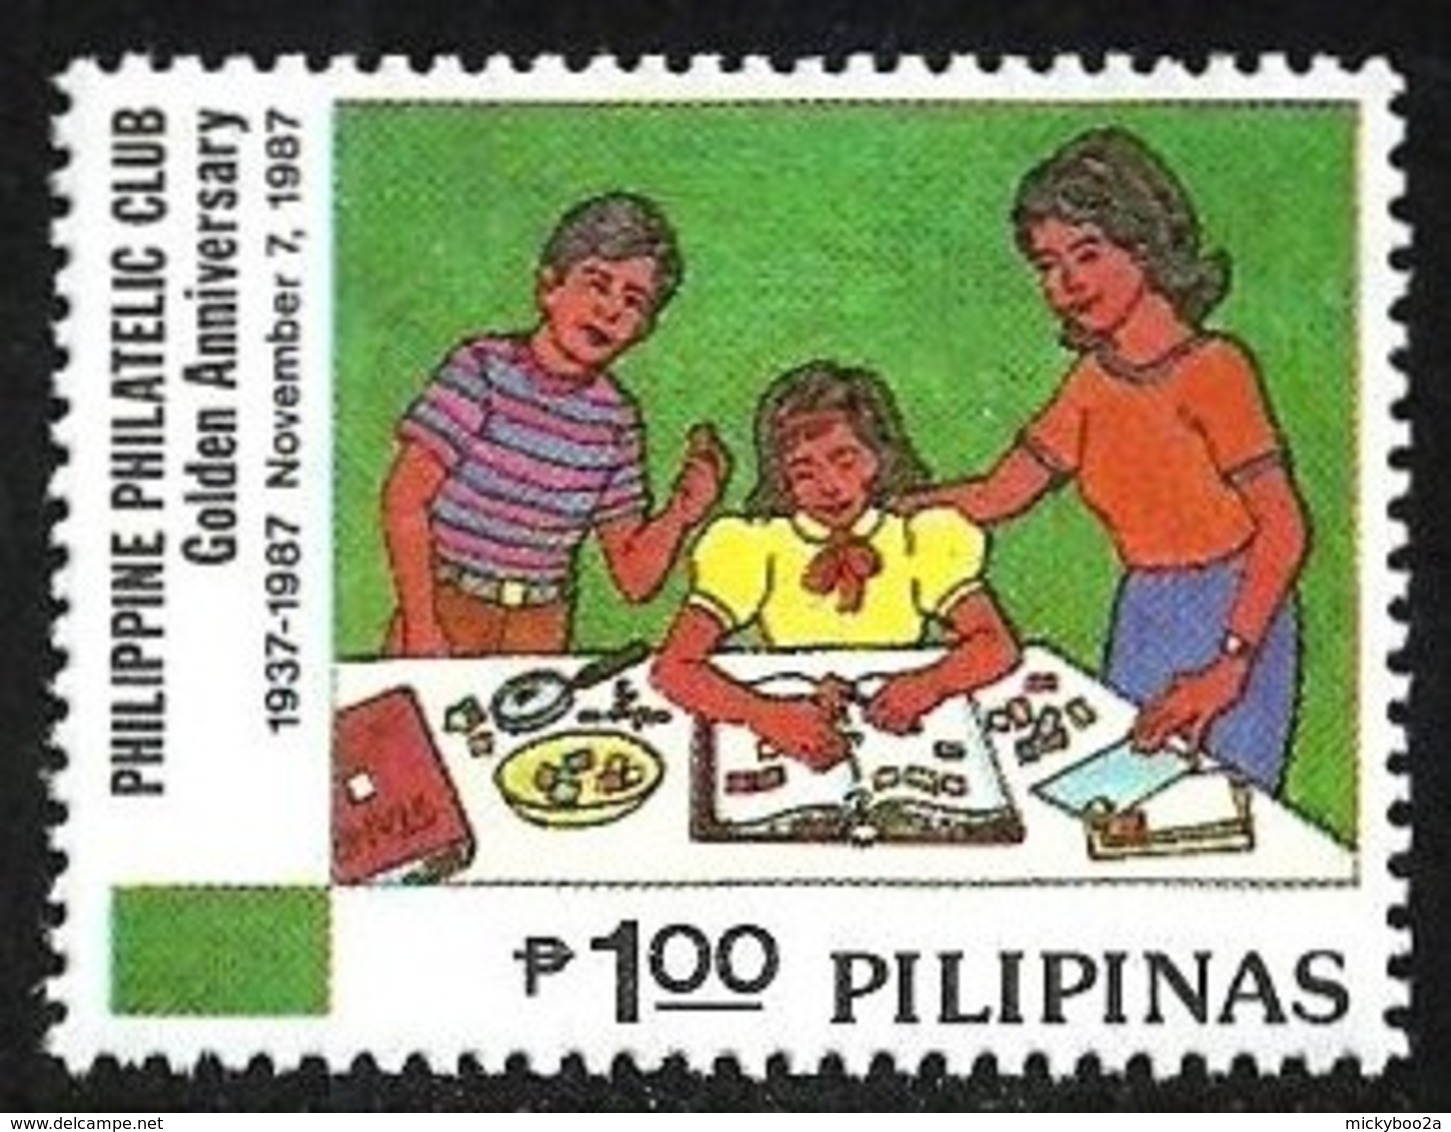 PHILIPPINES 1987 PHILATELIC CLUB STAMP COLLECTING SET MNH - Philippines